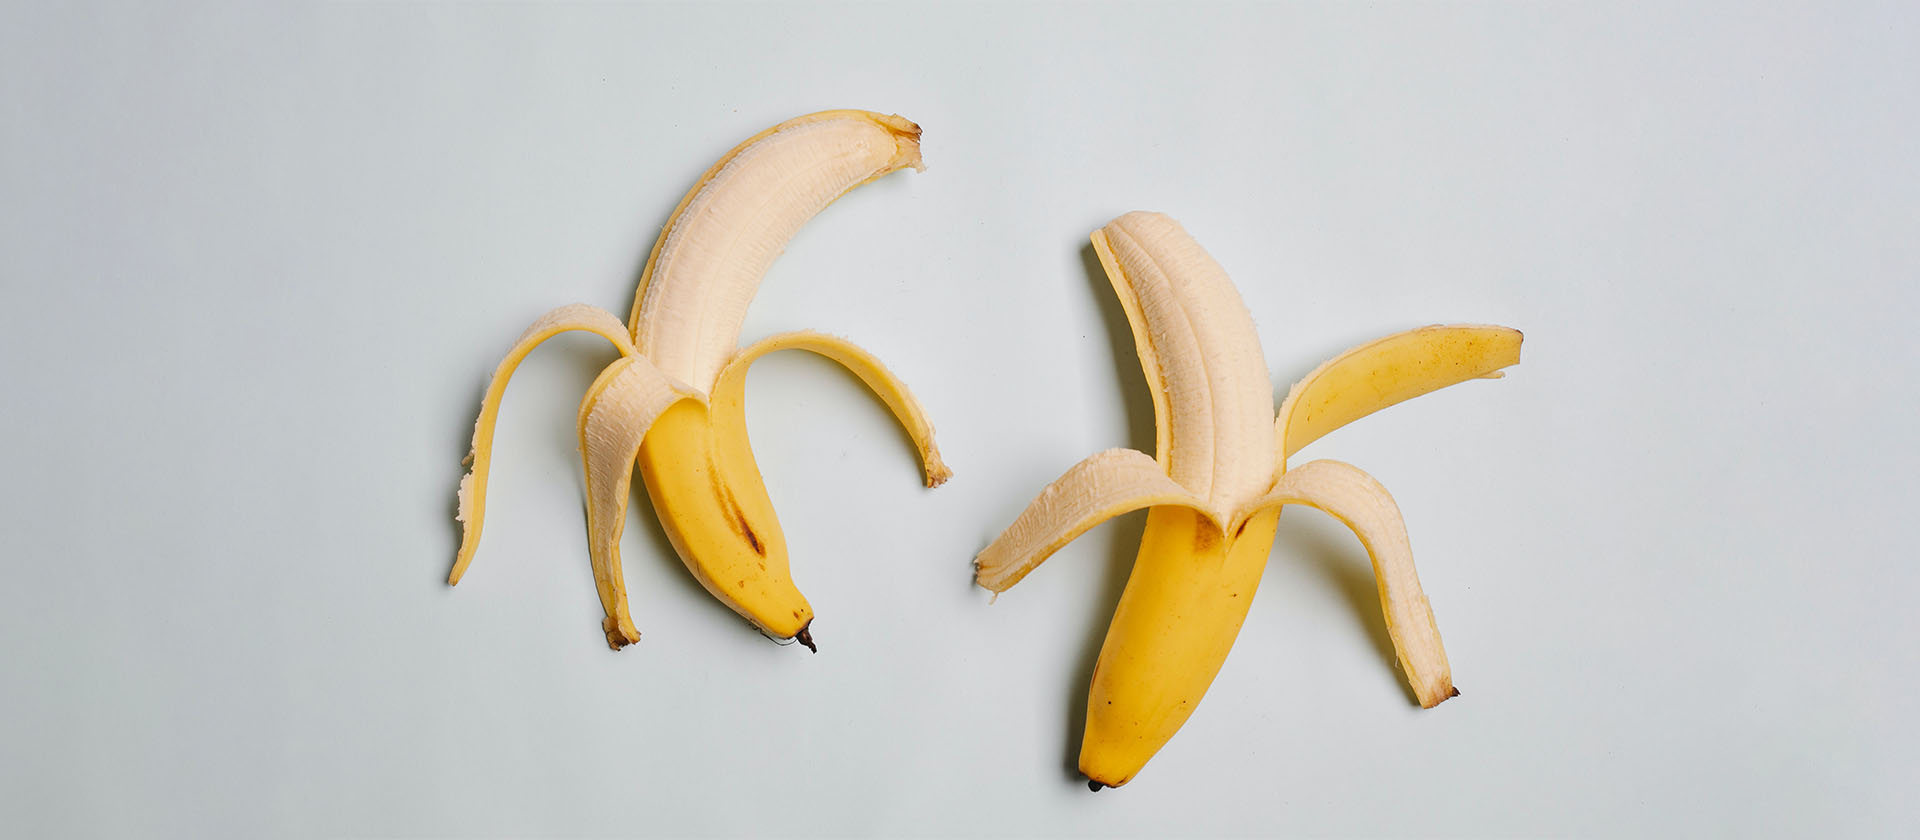 Bananen | Bildquelle: Pixabay